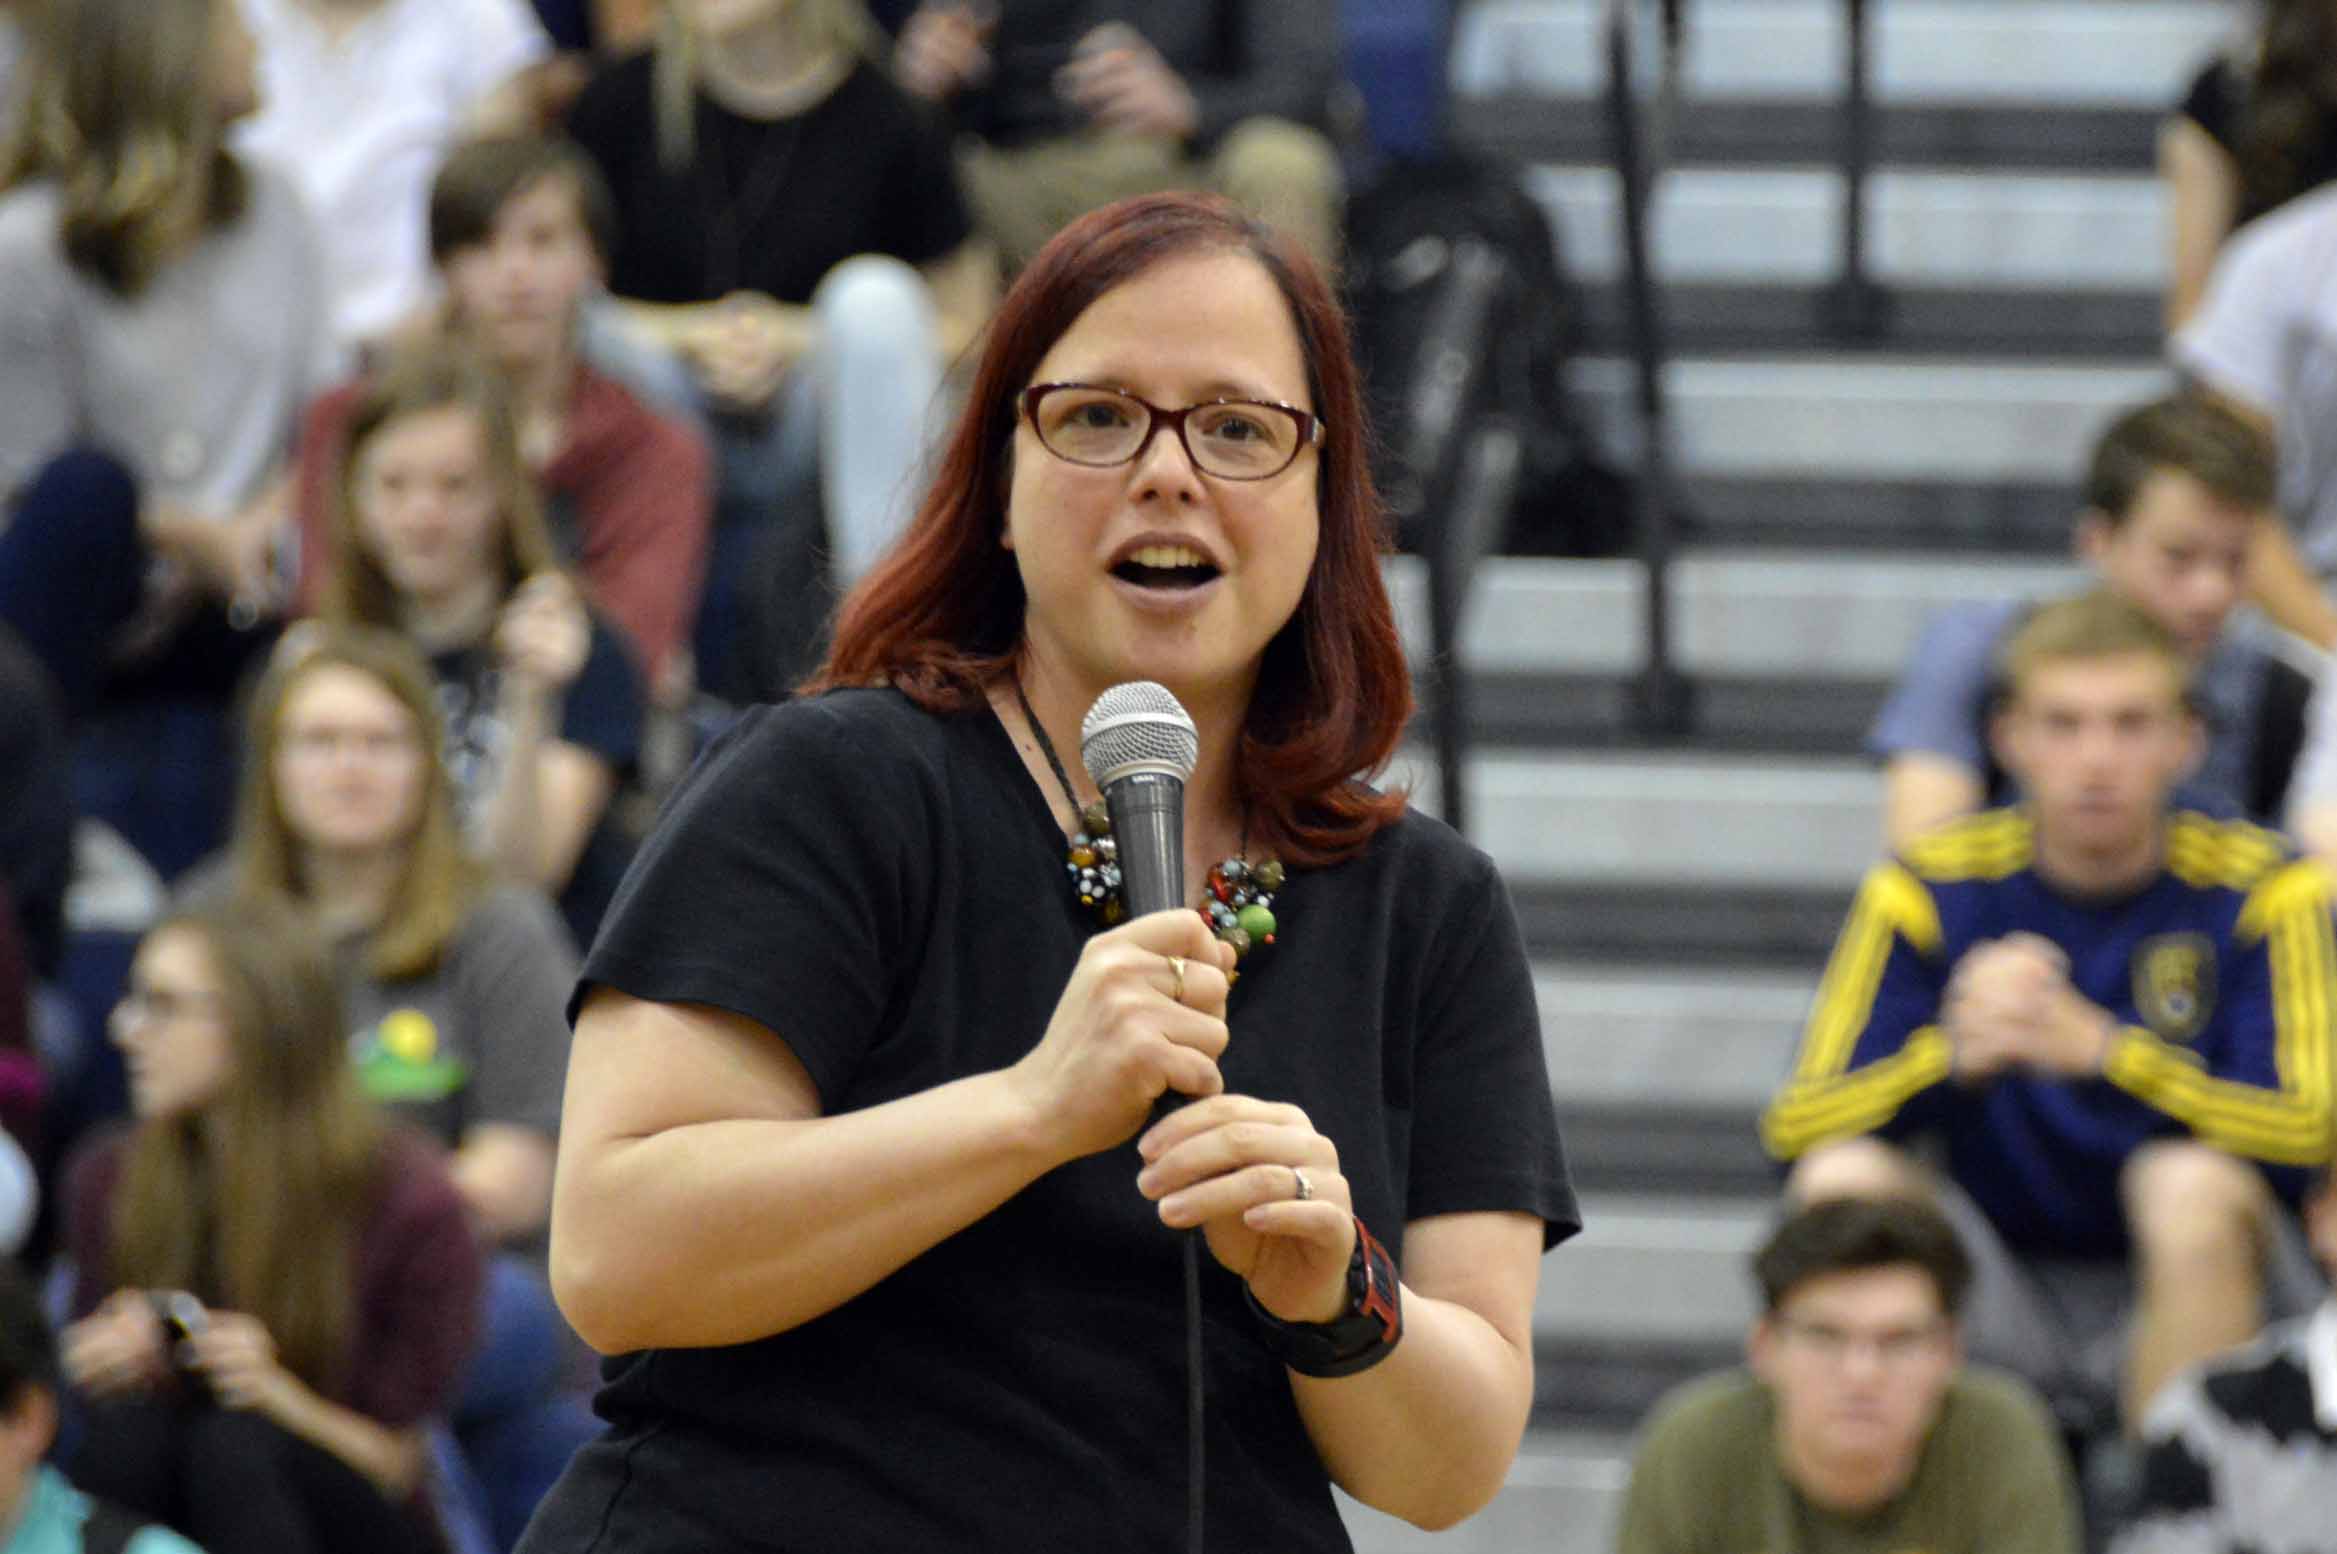 Skyline ASL educator named 2016 Teacher of the Year